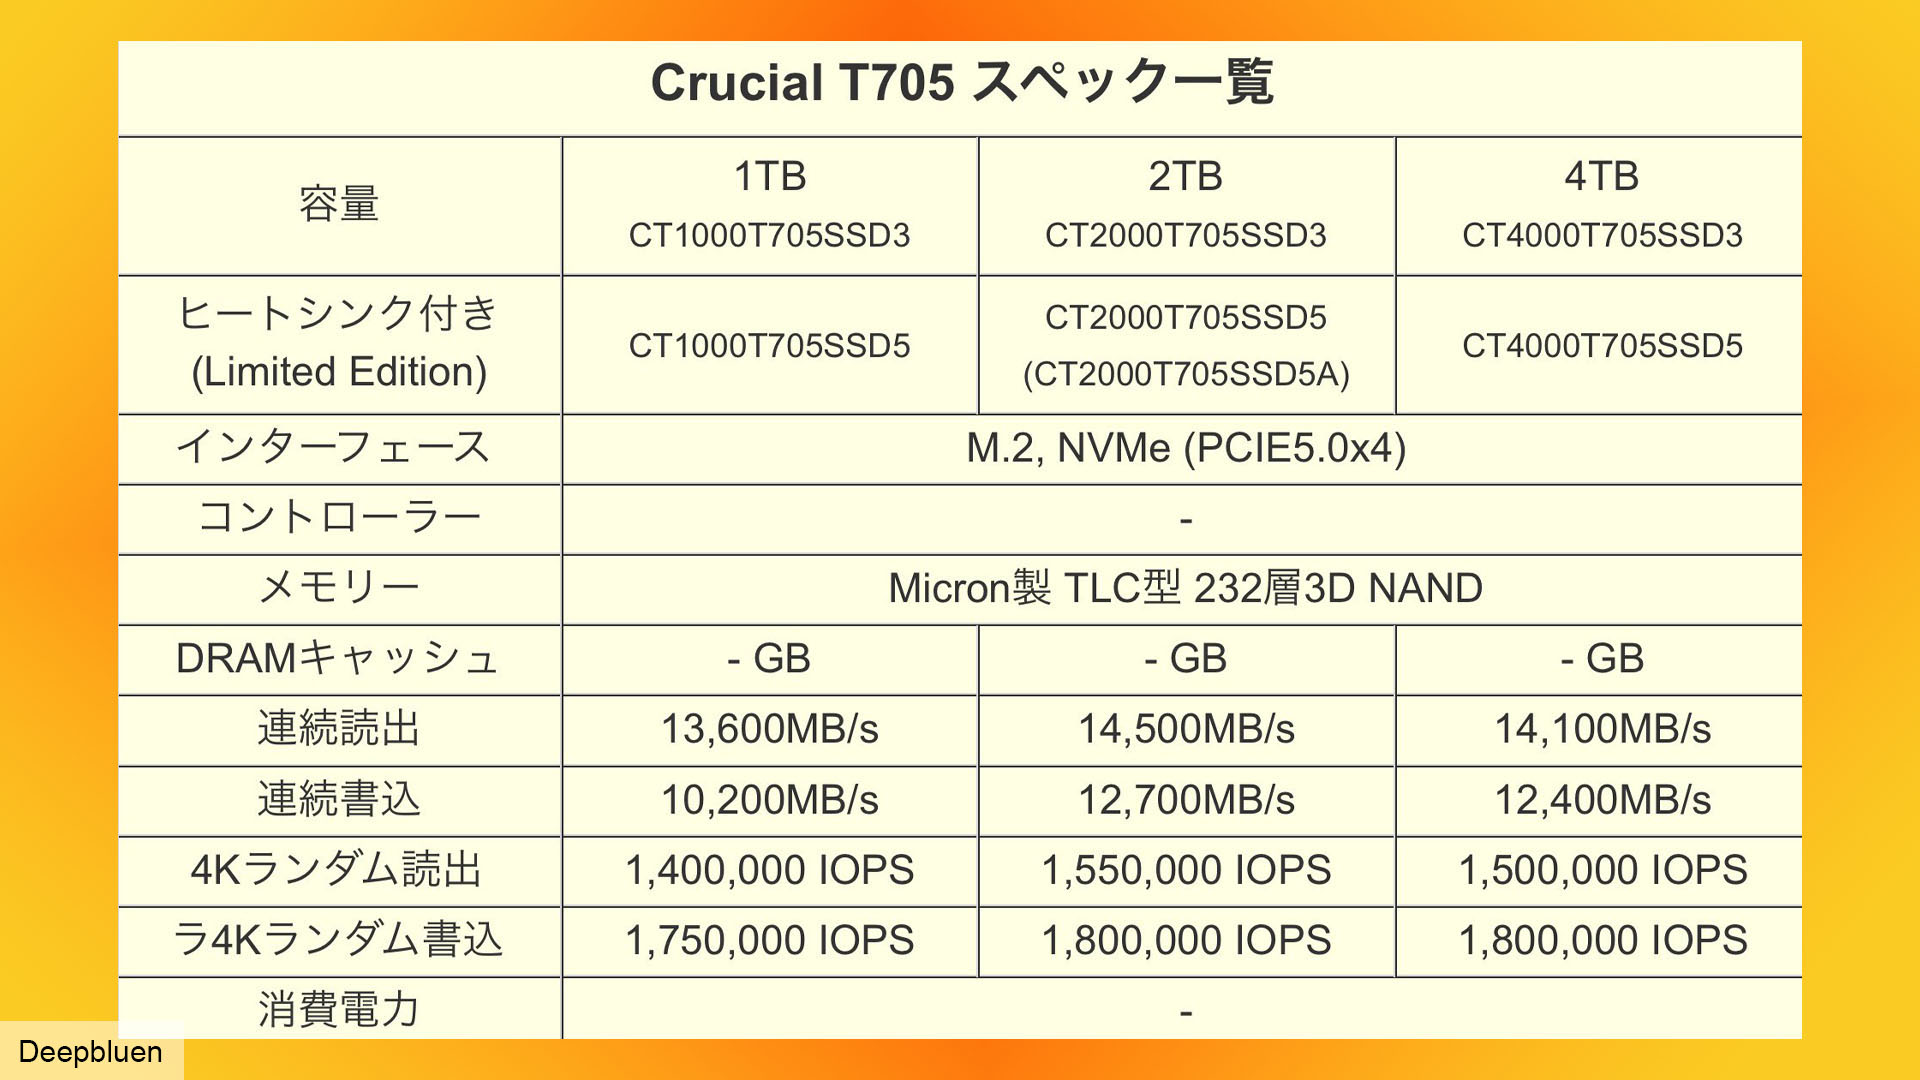 Crucial T705 SSD specs table leak